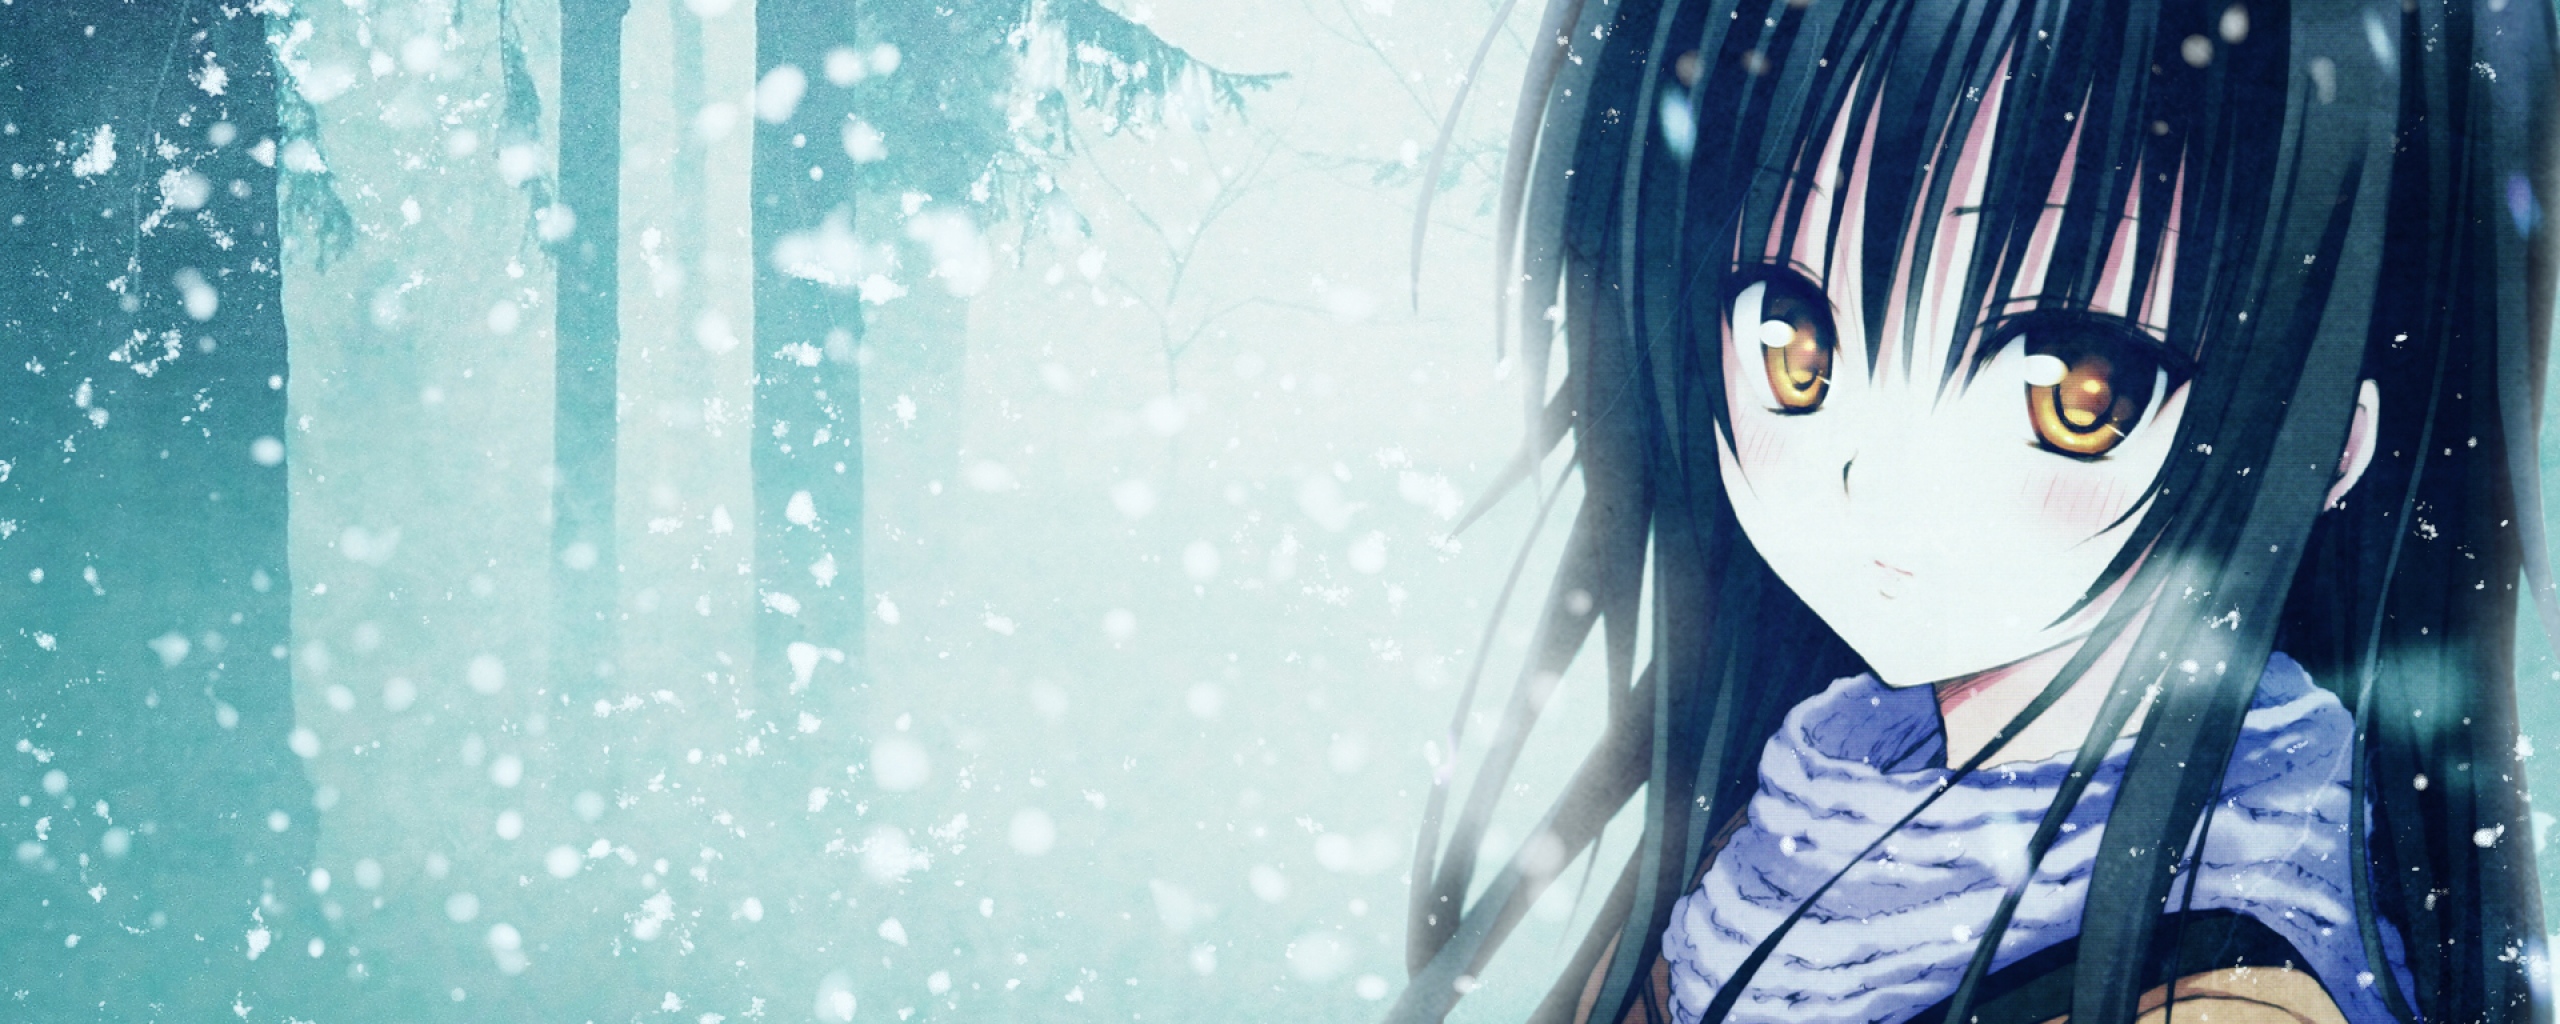 Yui Anime Wood Scarf Snow Dual Monitor Resolution HD Background